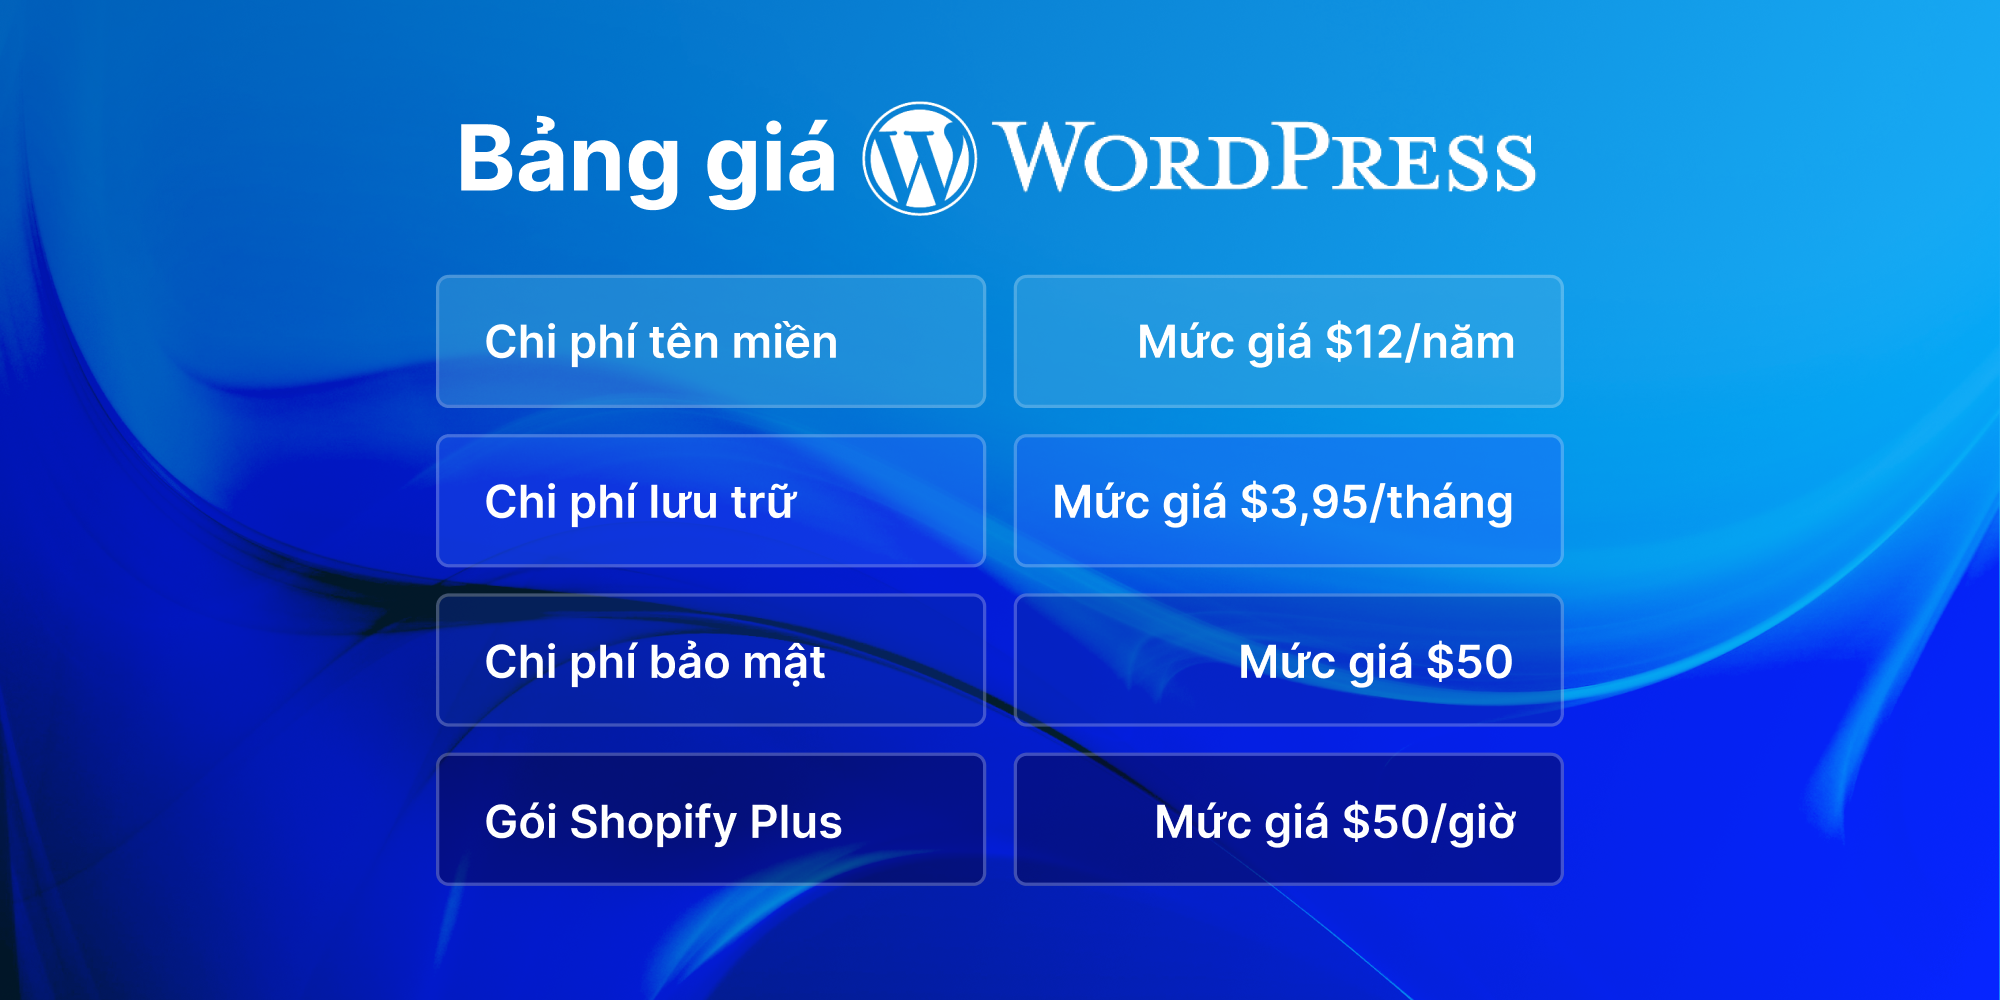 Bảng giá WordPress